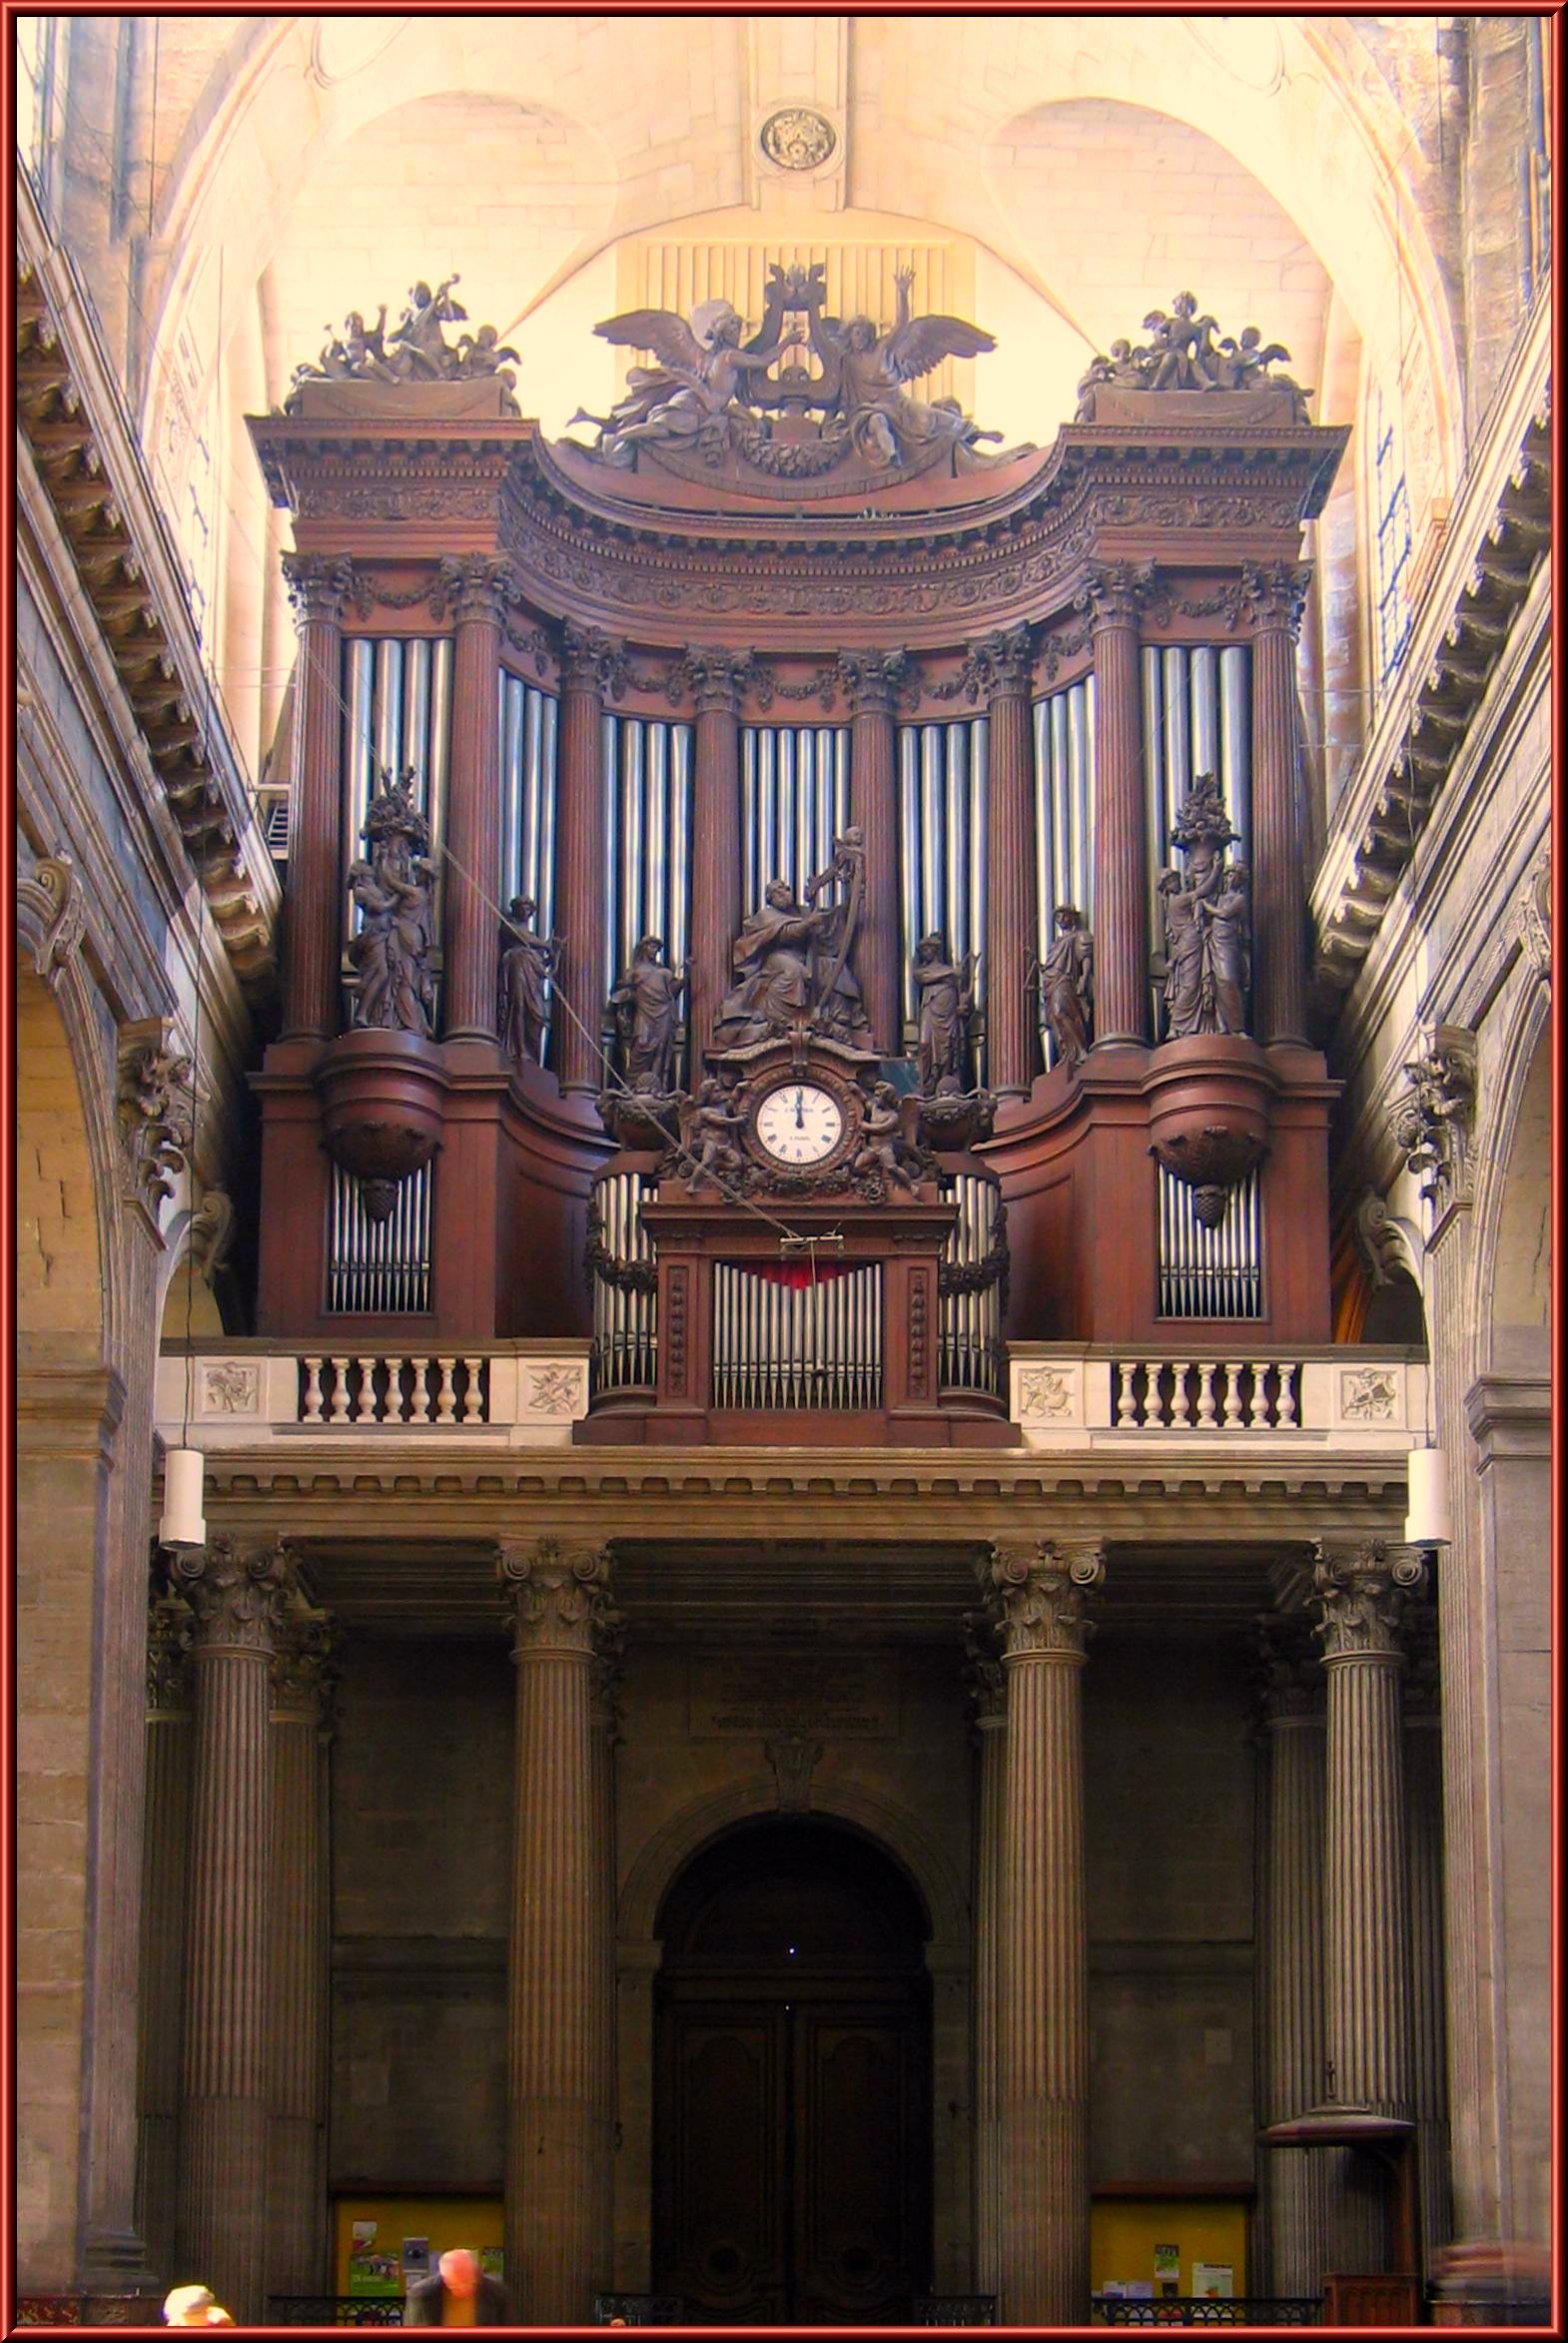 an elaborate organ sits on the far end of a balcony